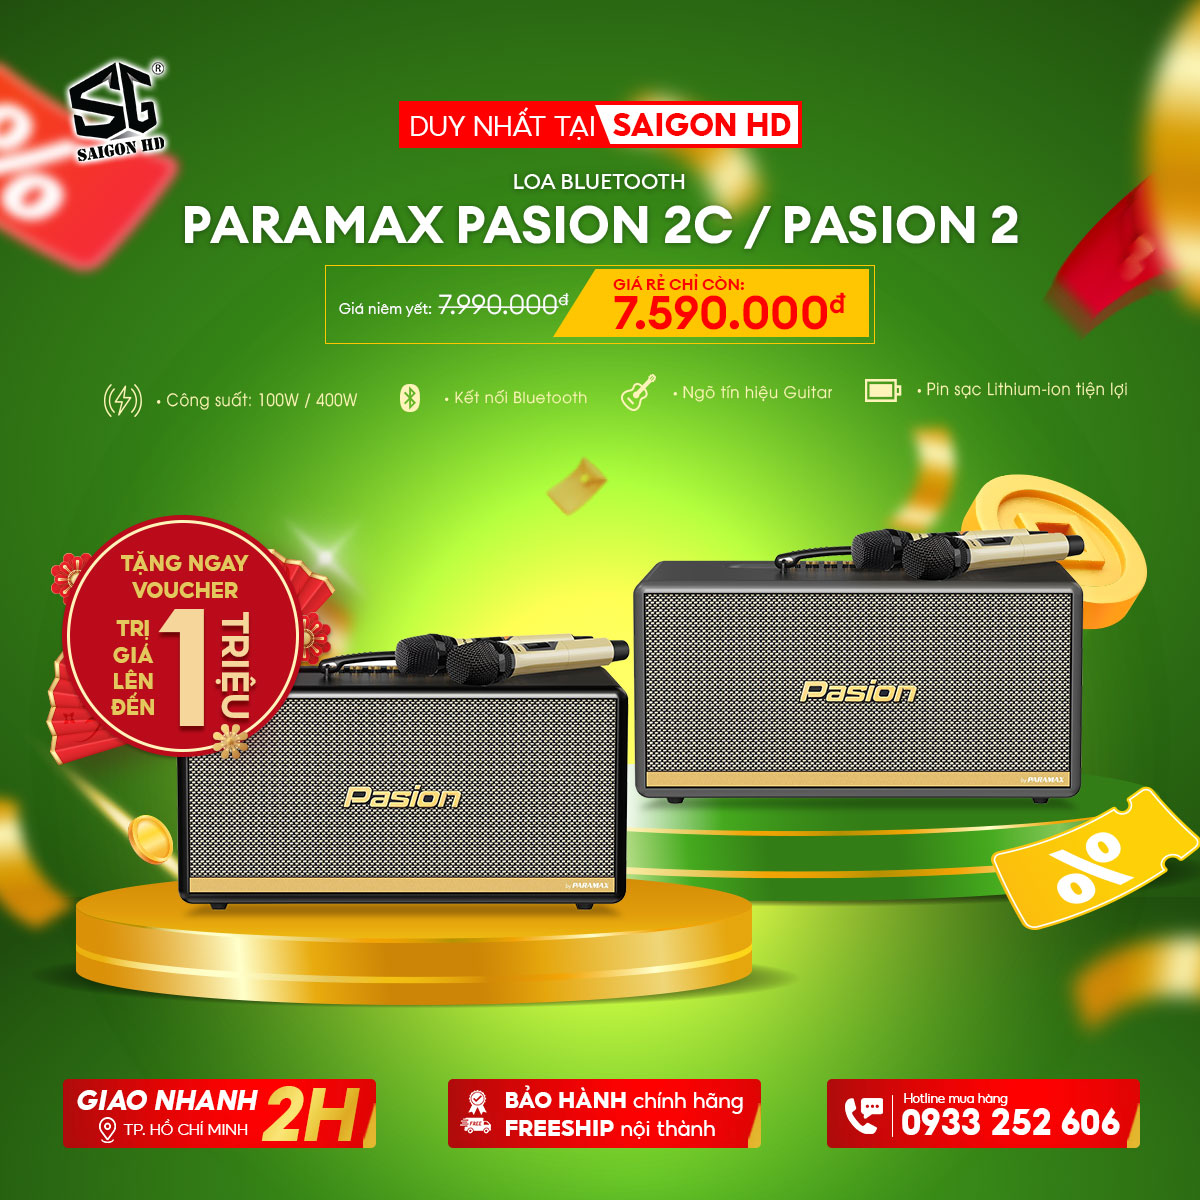 Loa Paramax Pasion 2 - Pasion 2C